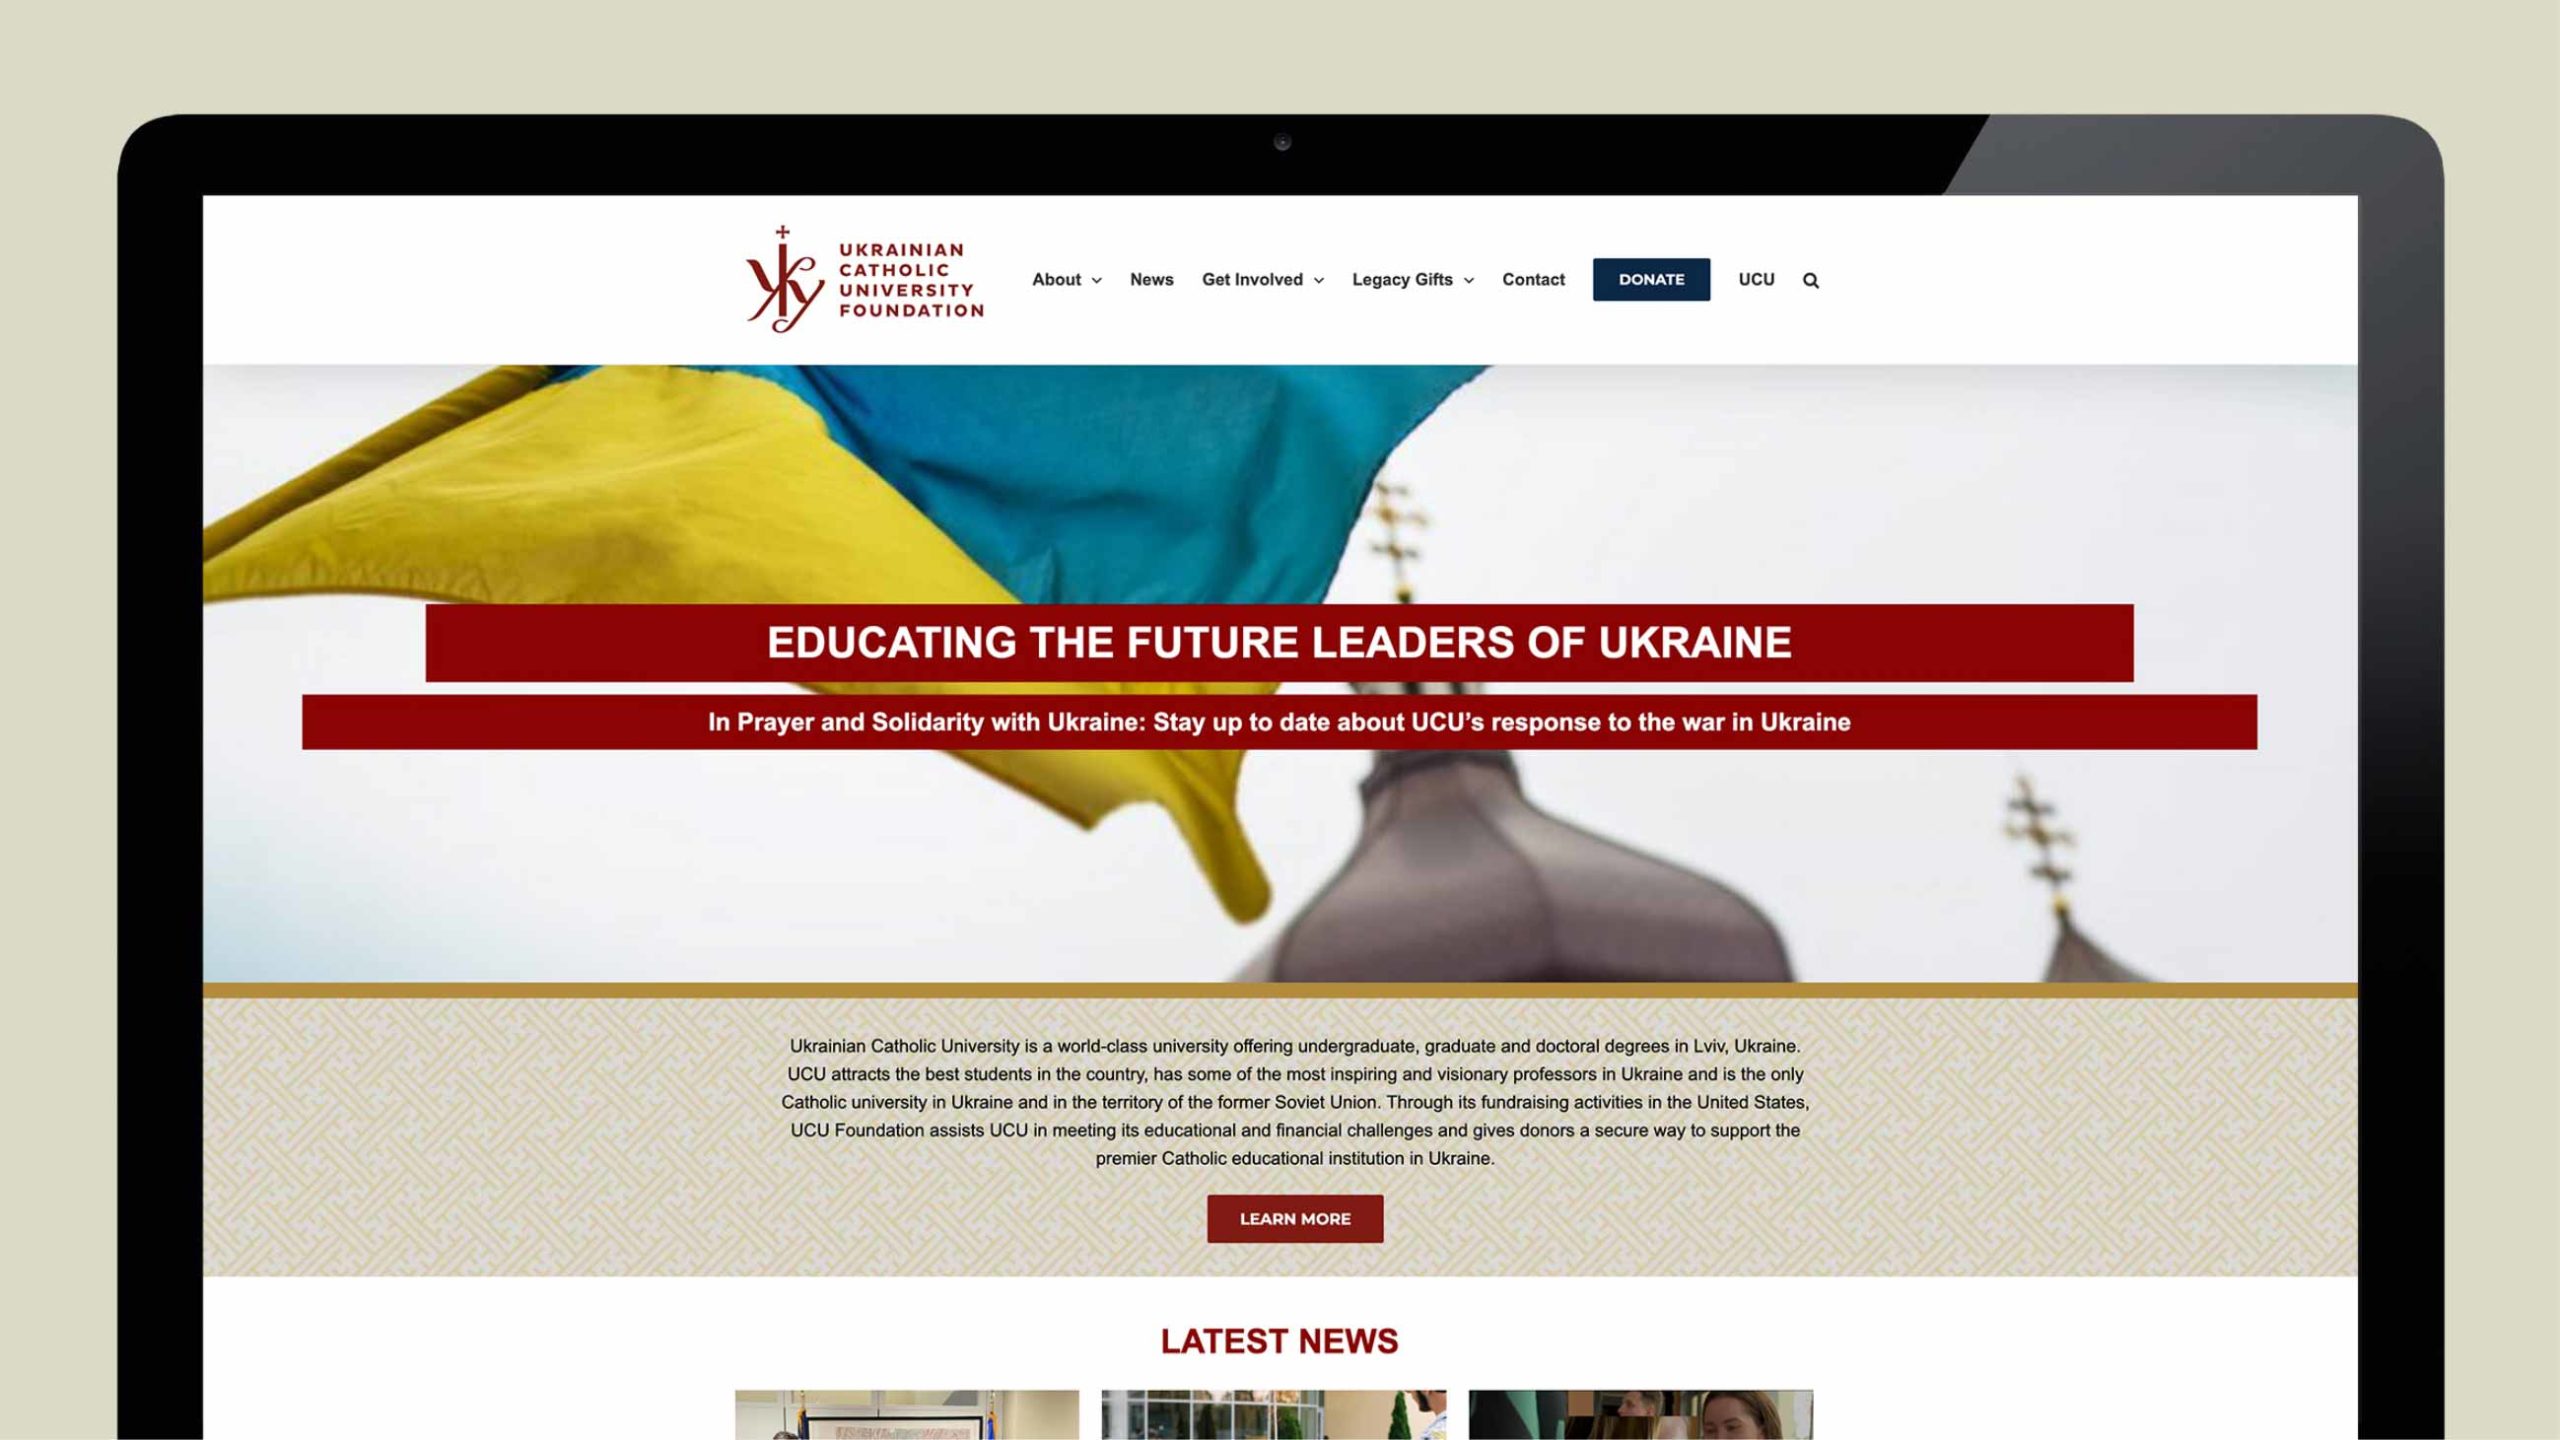 UCU Foundation website home page